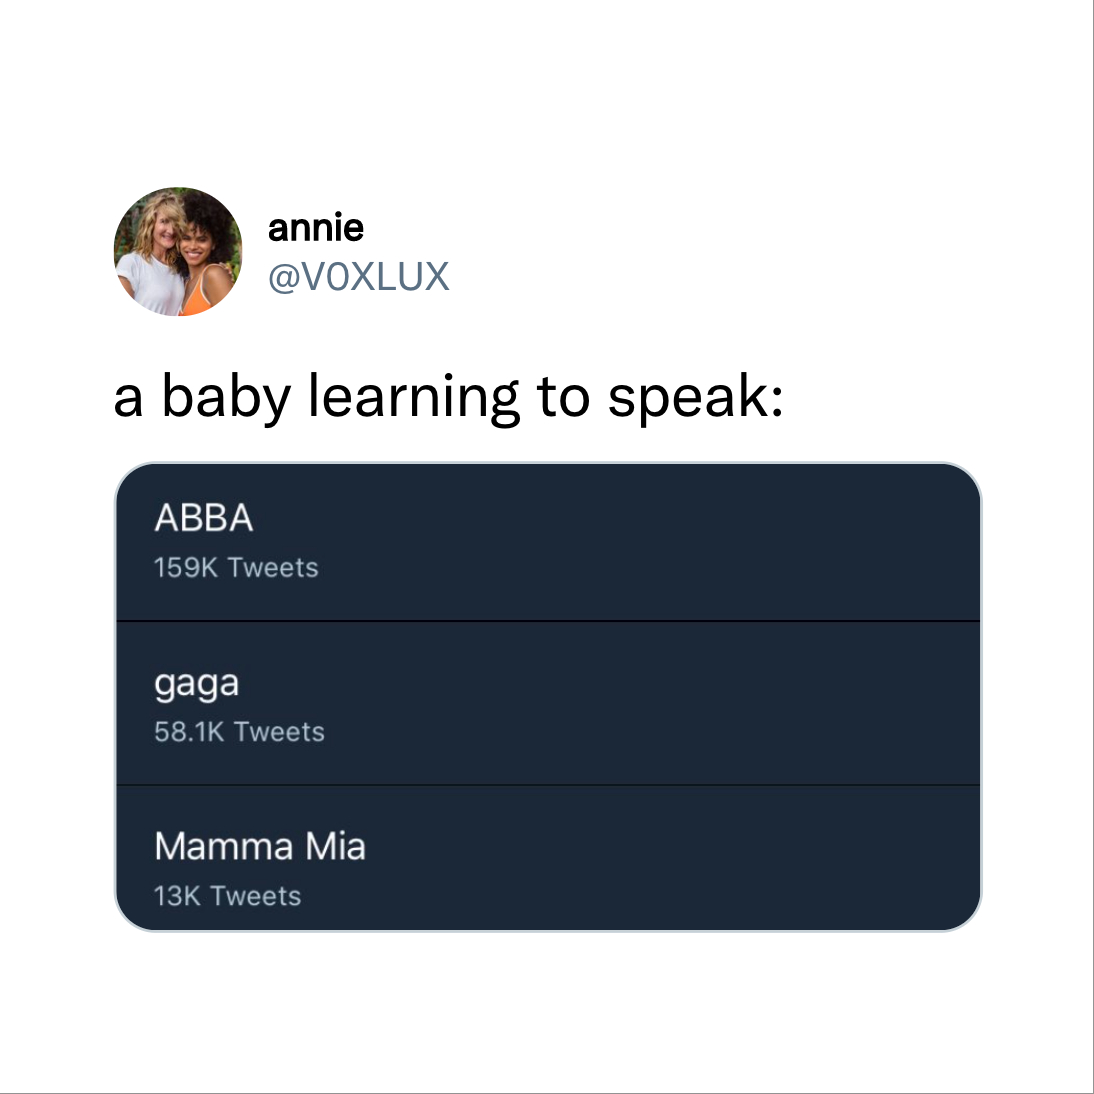 multimedia - annie a baby learning to speak Abba Tweets gaga Tweets Mamma Mia 13K Tweets